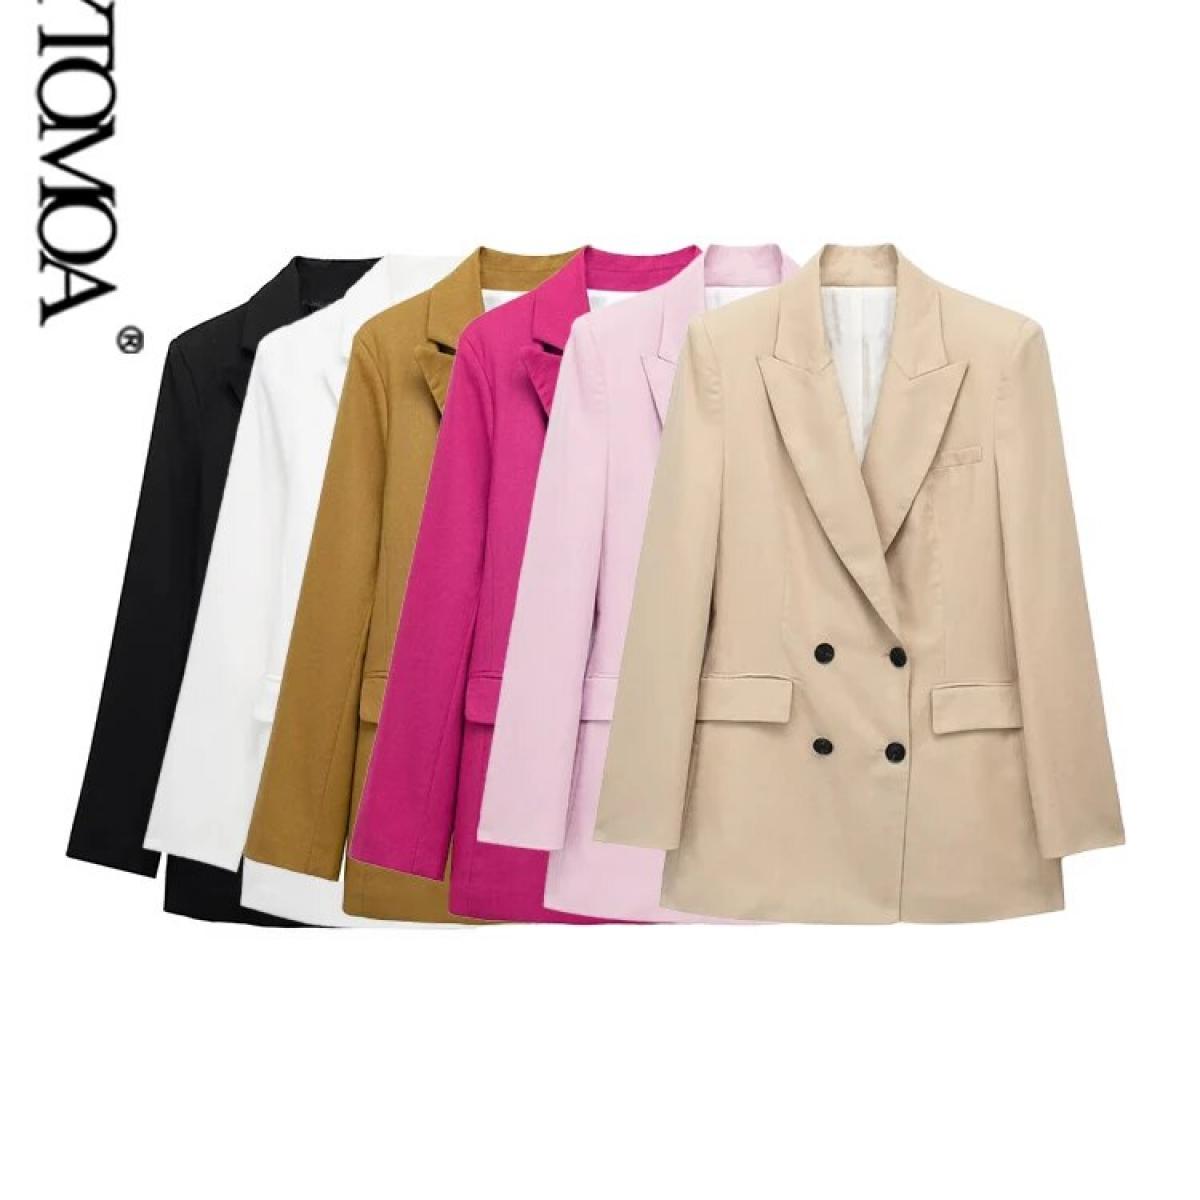 Kpytomoa Women Fashion Double Breasted Linen Blazer Coat Vintage Long Sleeve Flap Pockets Female Outerwear Chic Tops